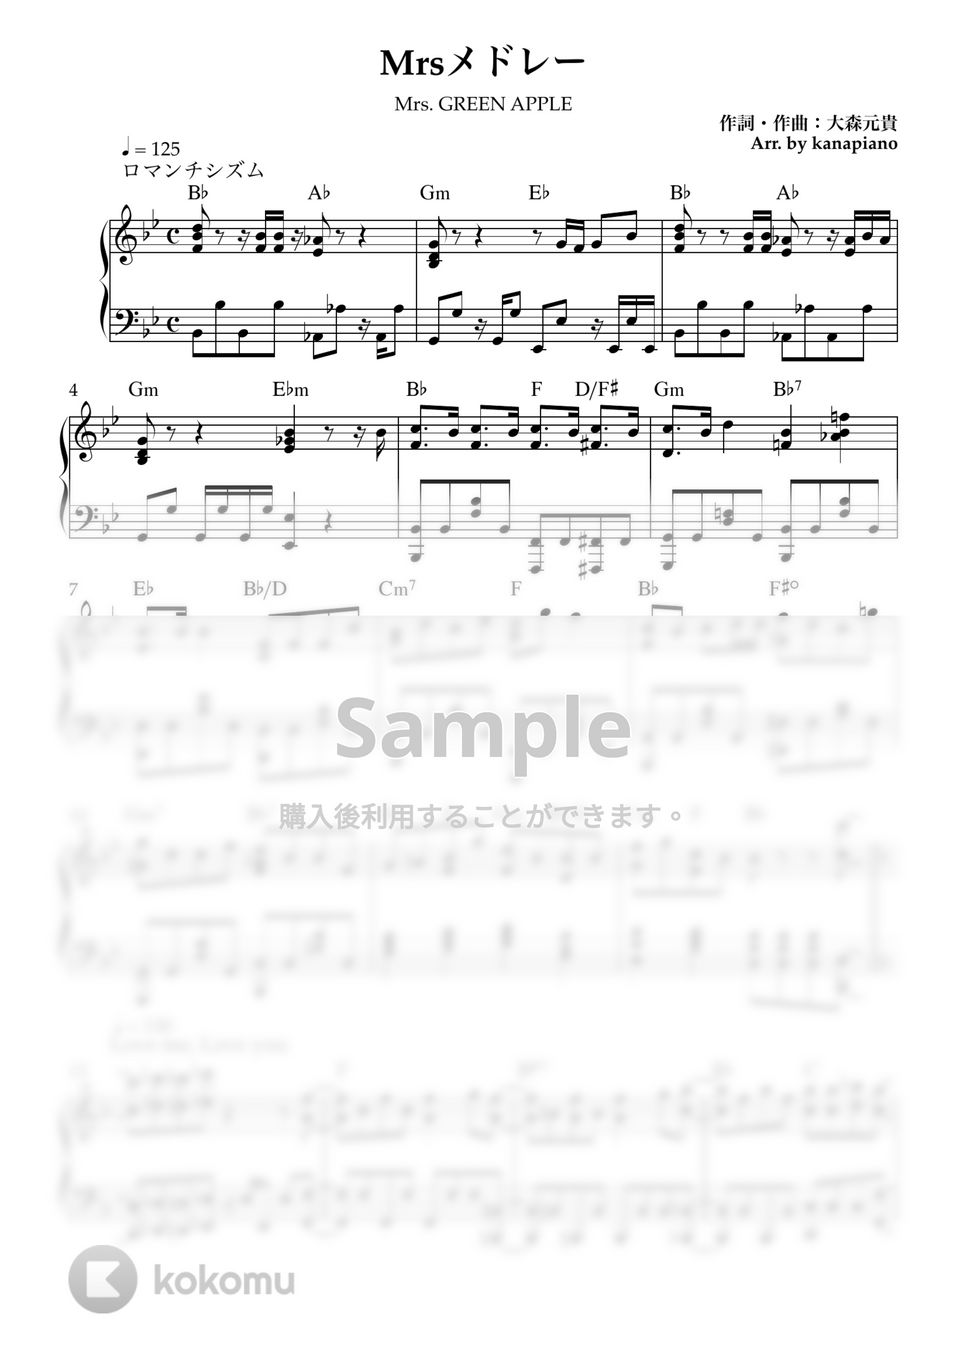 Mrs. GREEN APPLE - Mrs. GREEN APPLE ピアノメドレー (ピアノソロ) by kanapiano